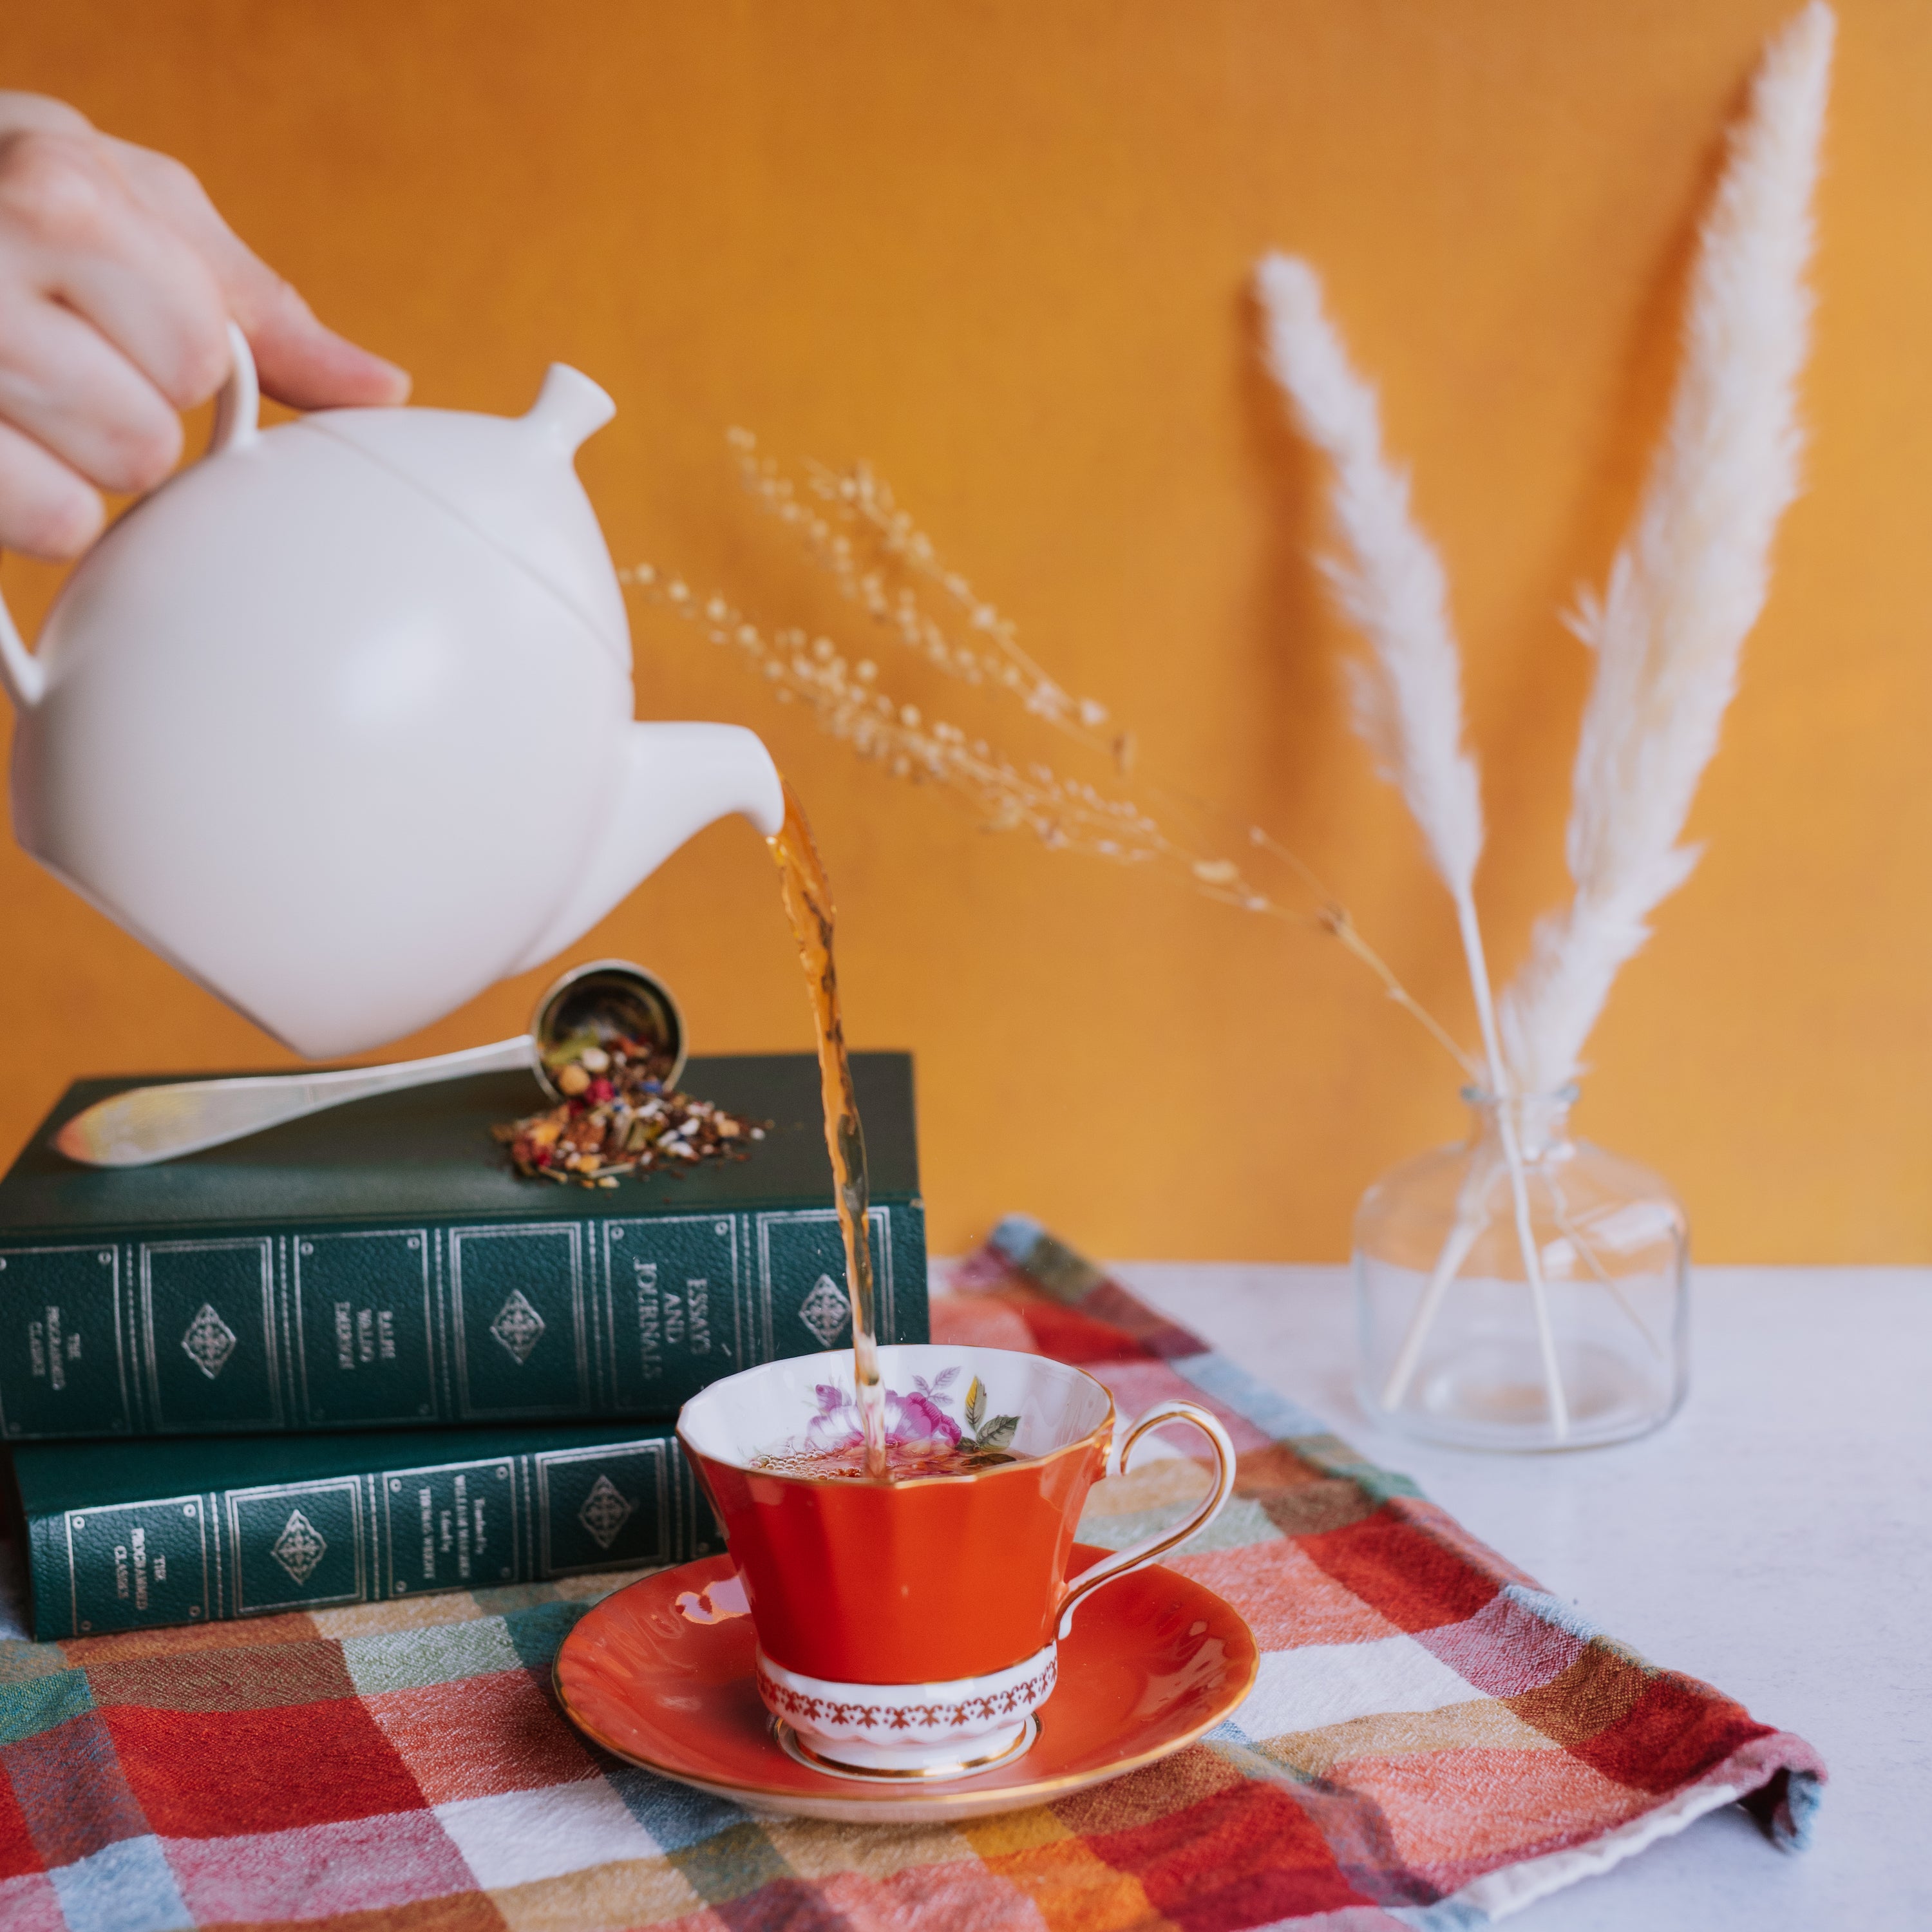 spirit of life herbal tisane poured into an orange vintage teacup